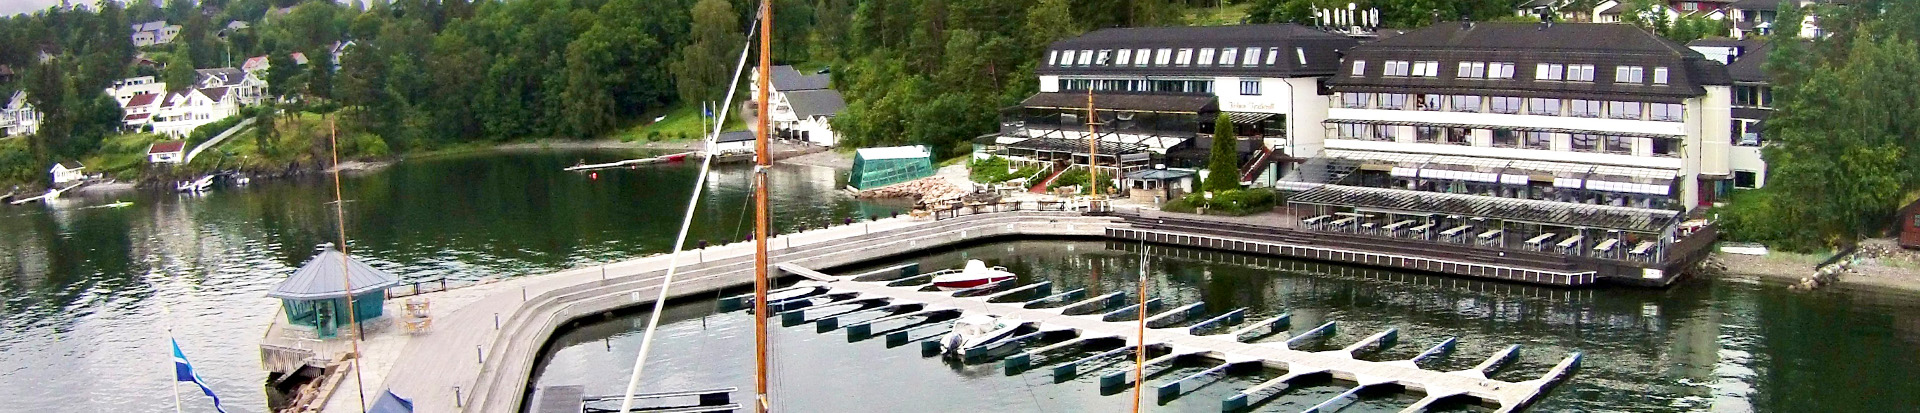 Holmen Fjordhotell - RIB Oslo